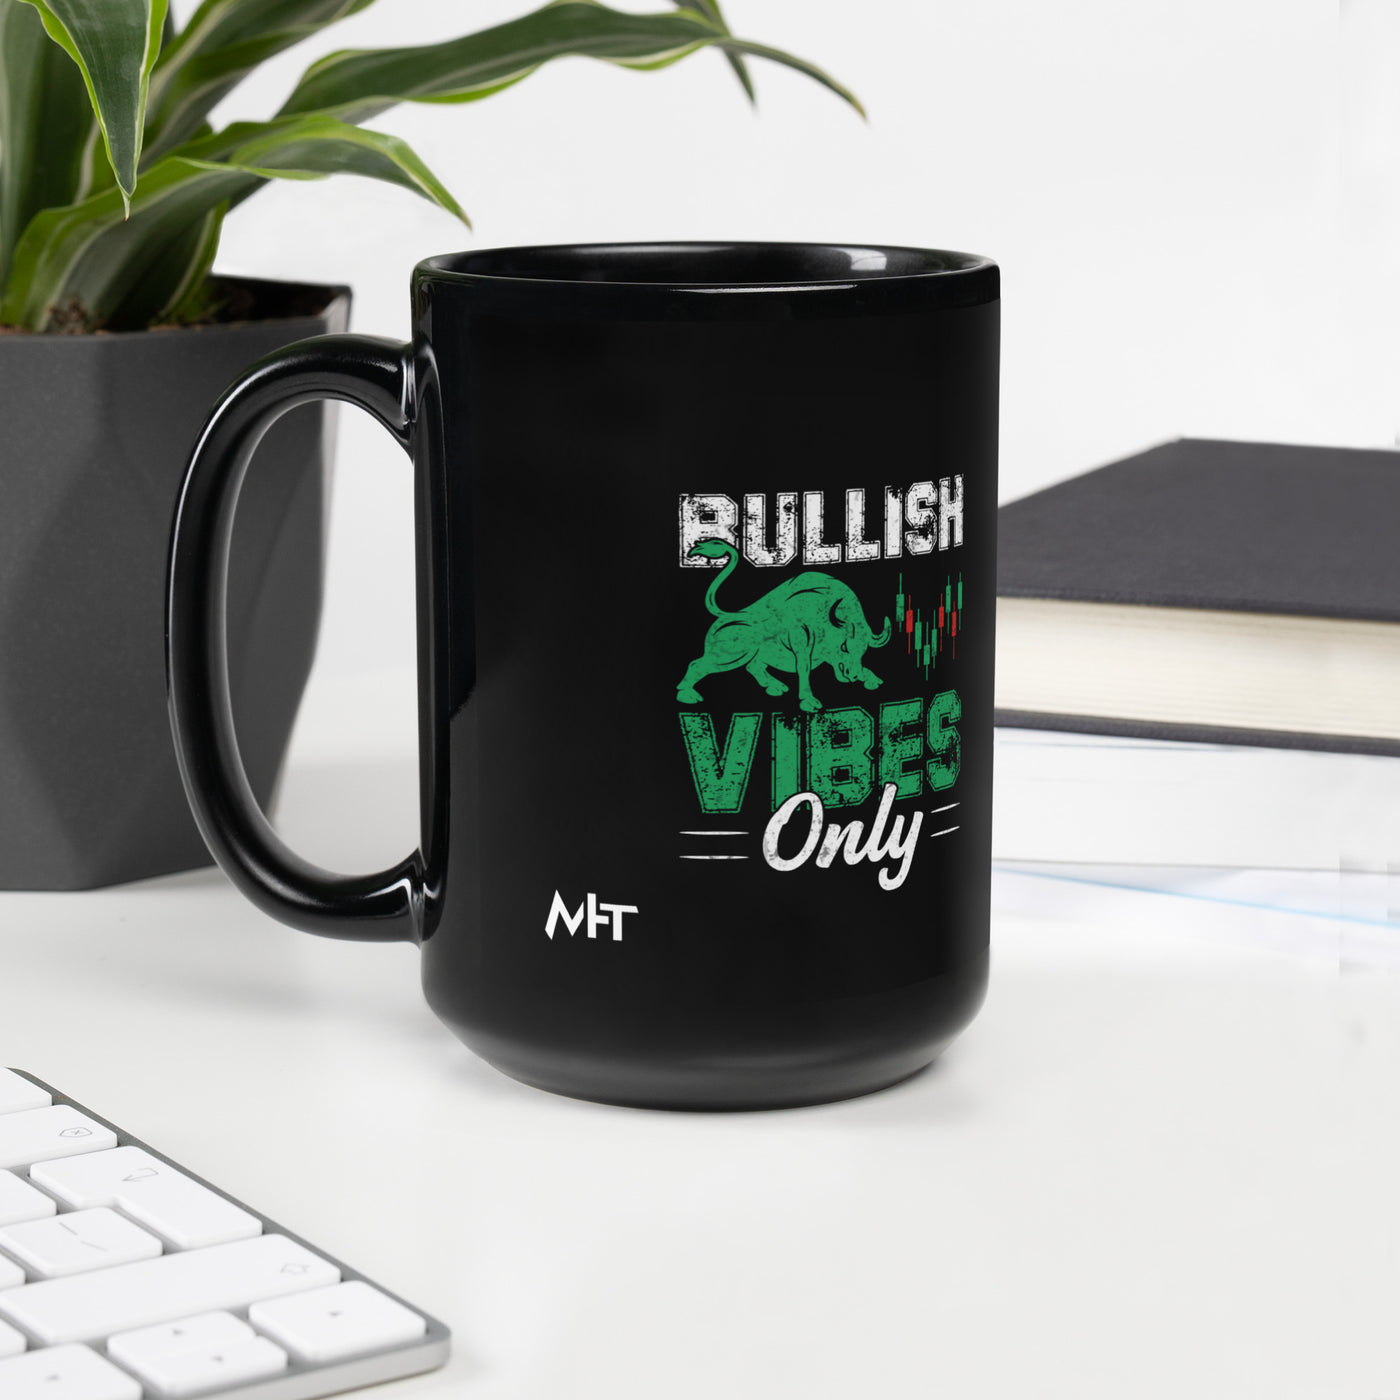 Bullish Vibes Only - Black Glossy Mug